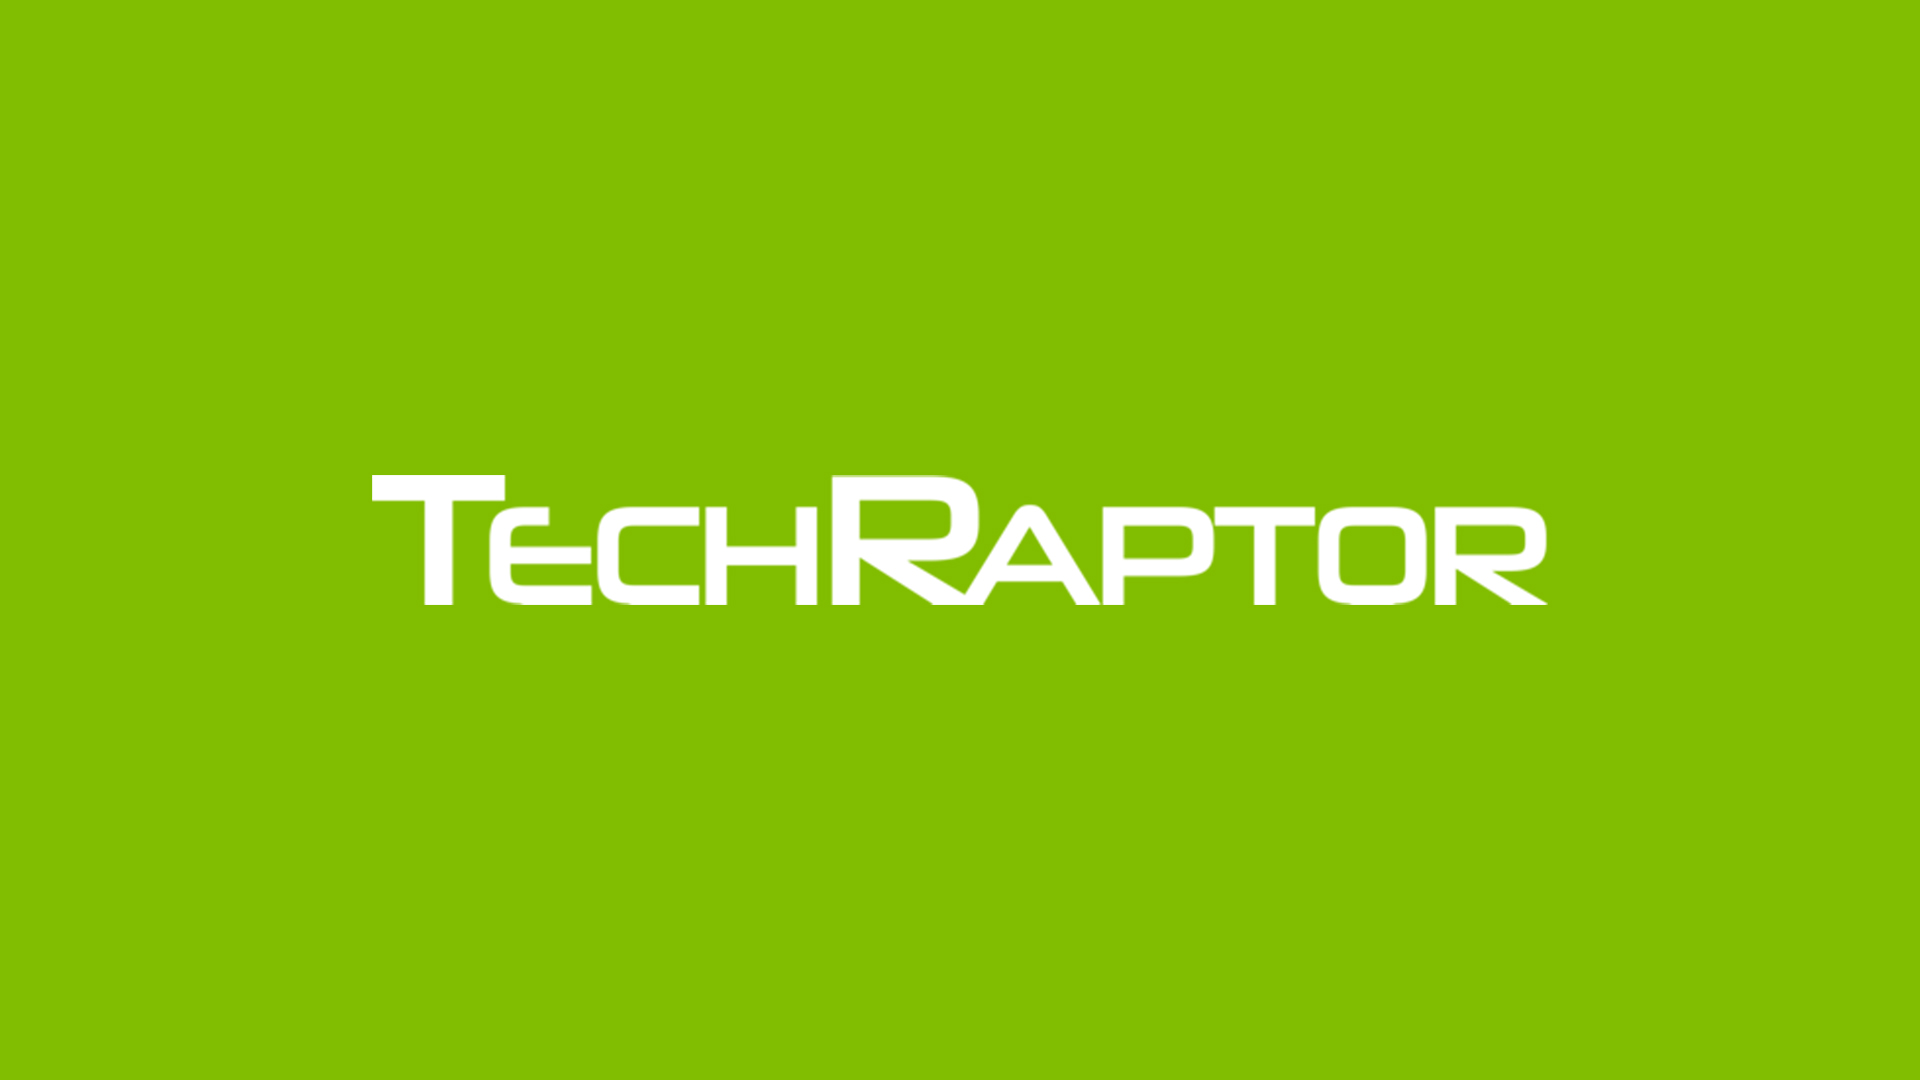 TechRaptor